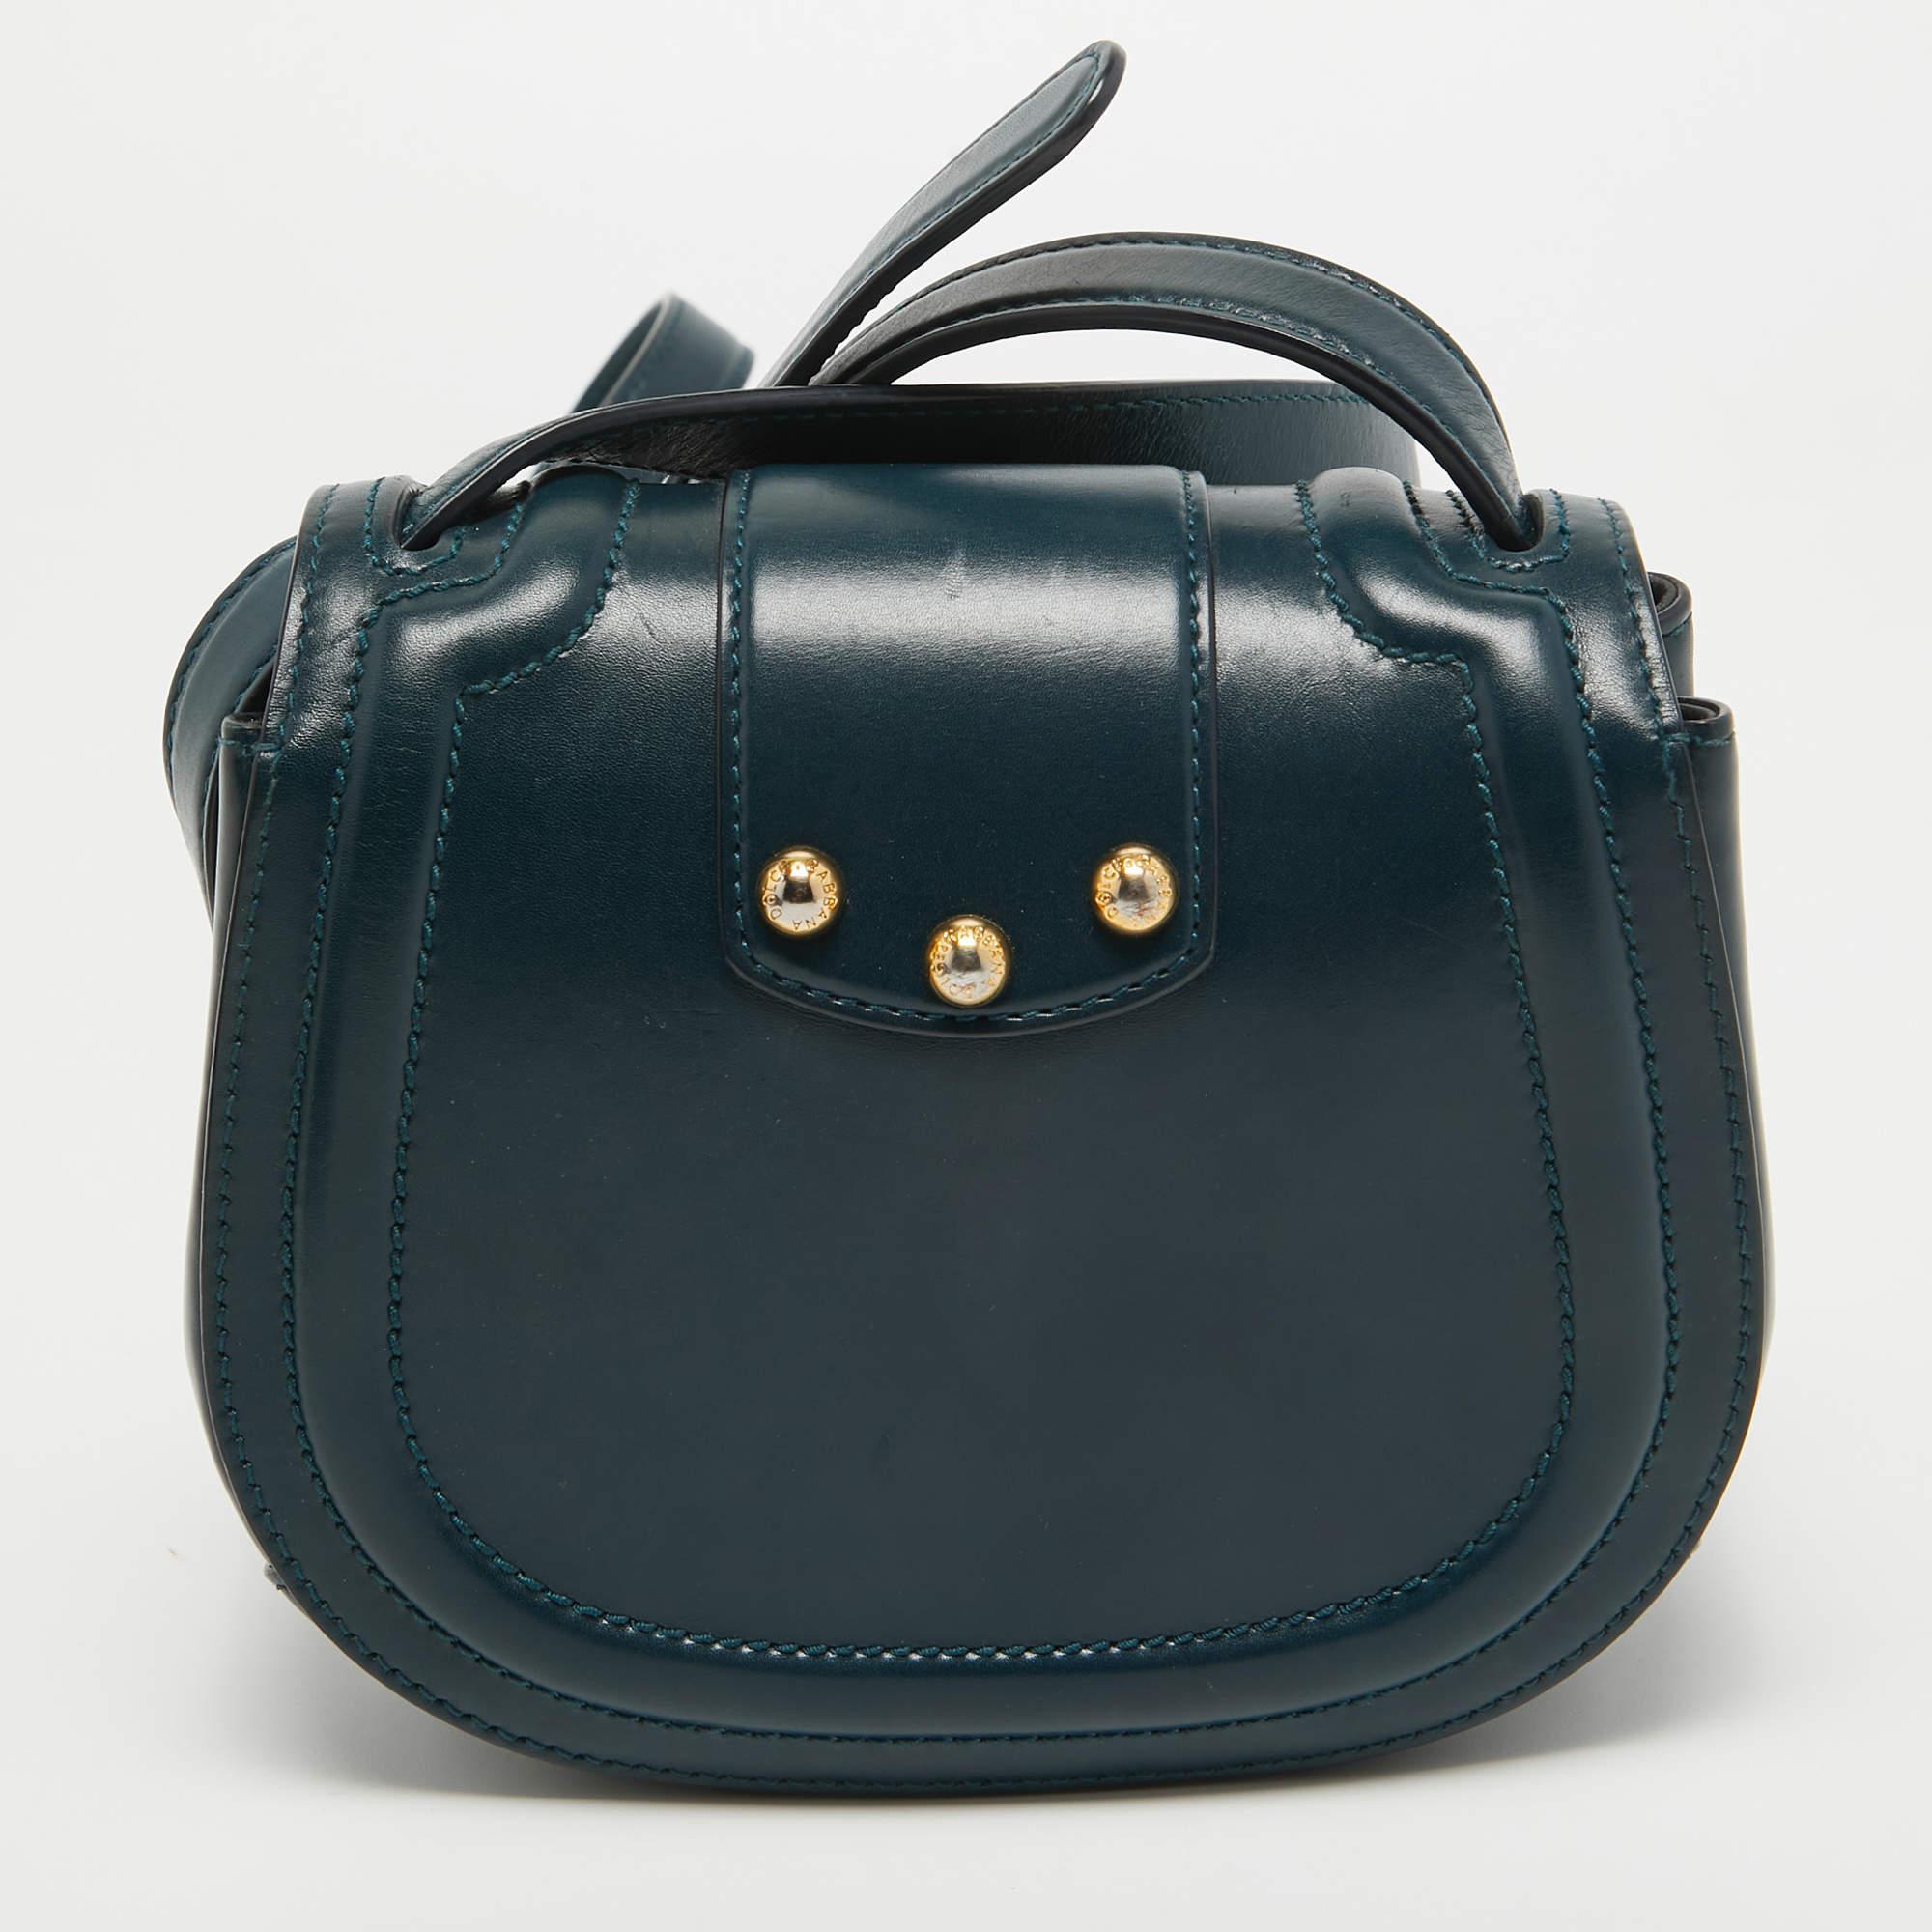 Dolce & Gabbana Teal Leather Amore Crossbody Bag 4